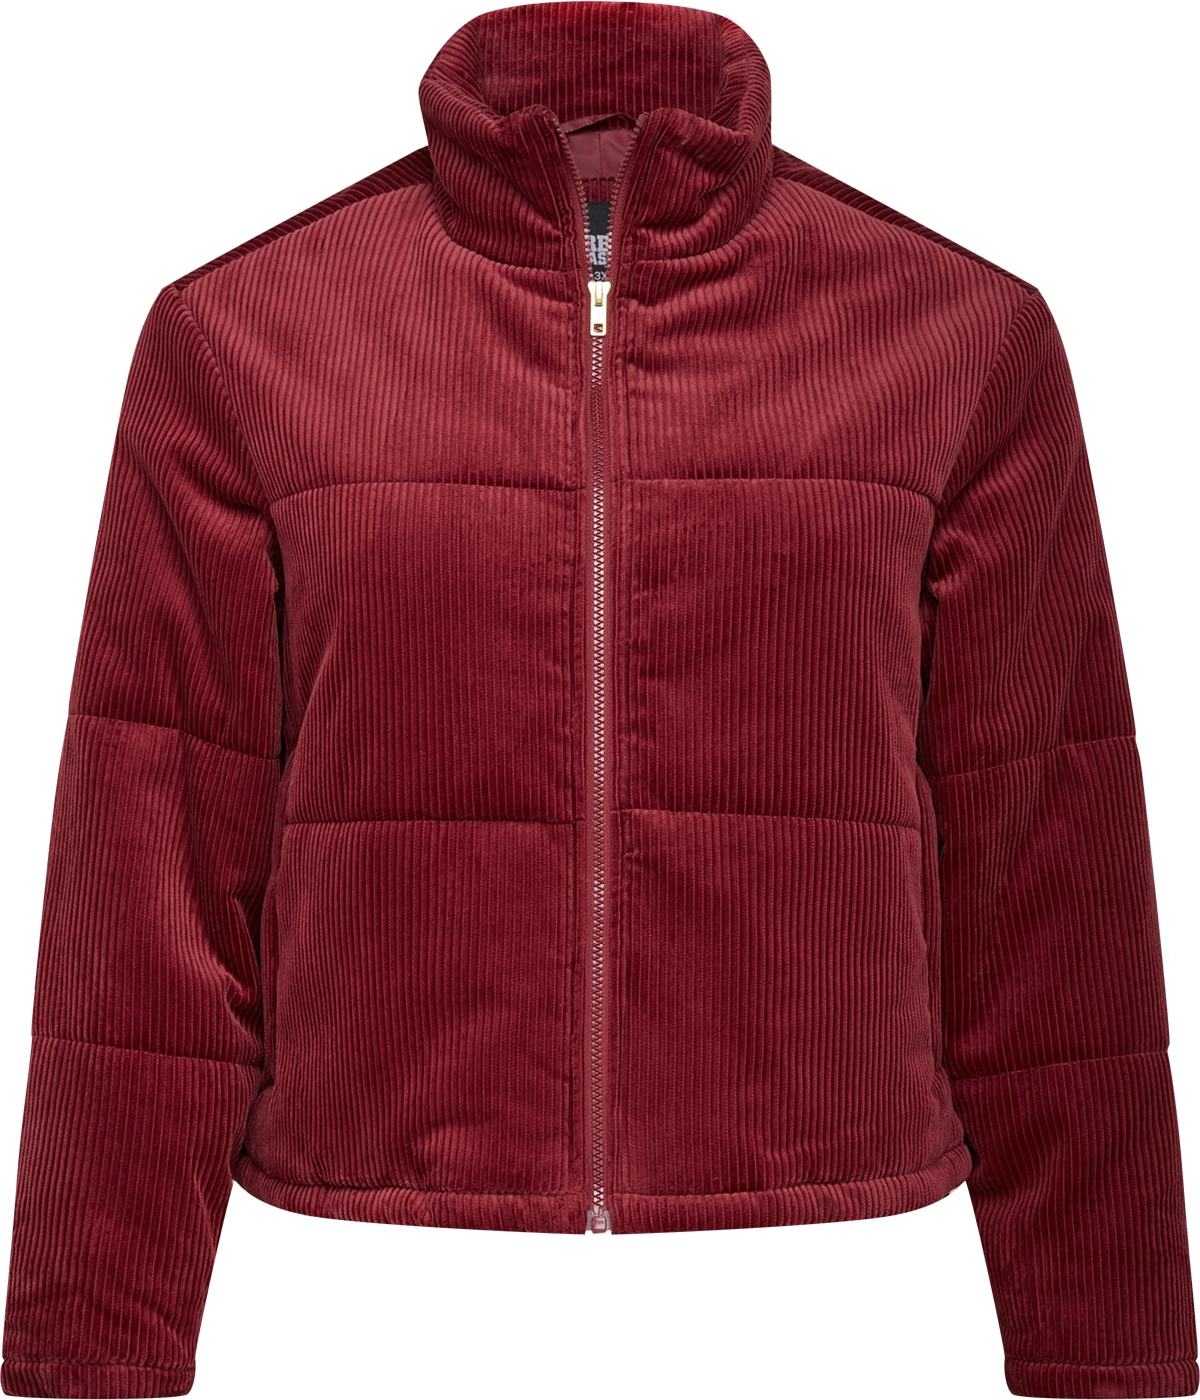 Urban Classics Přechodná bunda 'Corduroy Puffer Jacket' burgundská červeň